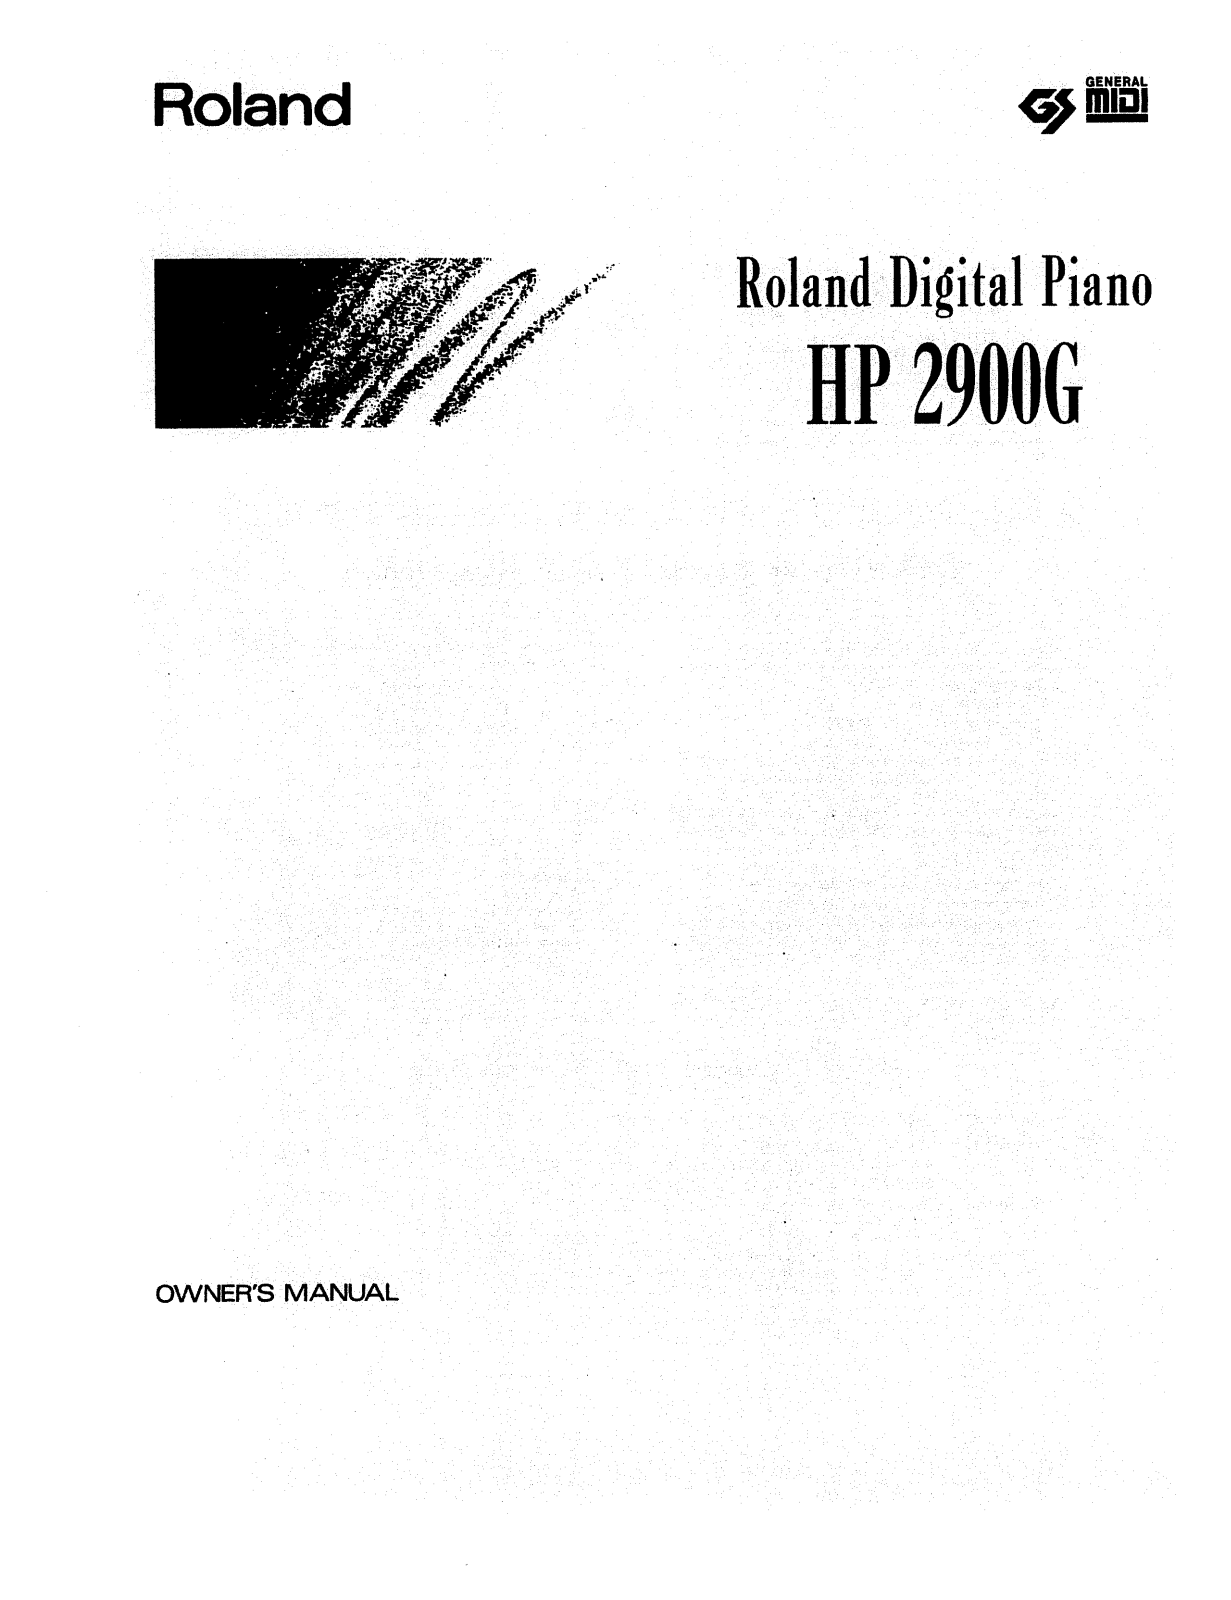 Roland HP 2900G Service Manual